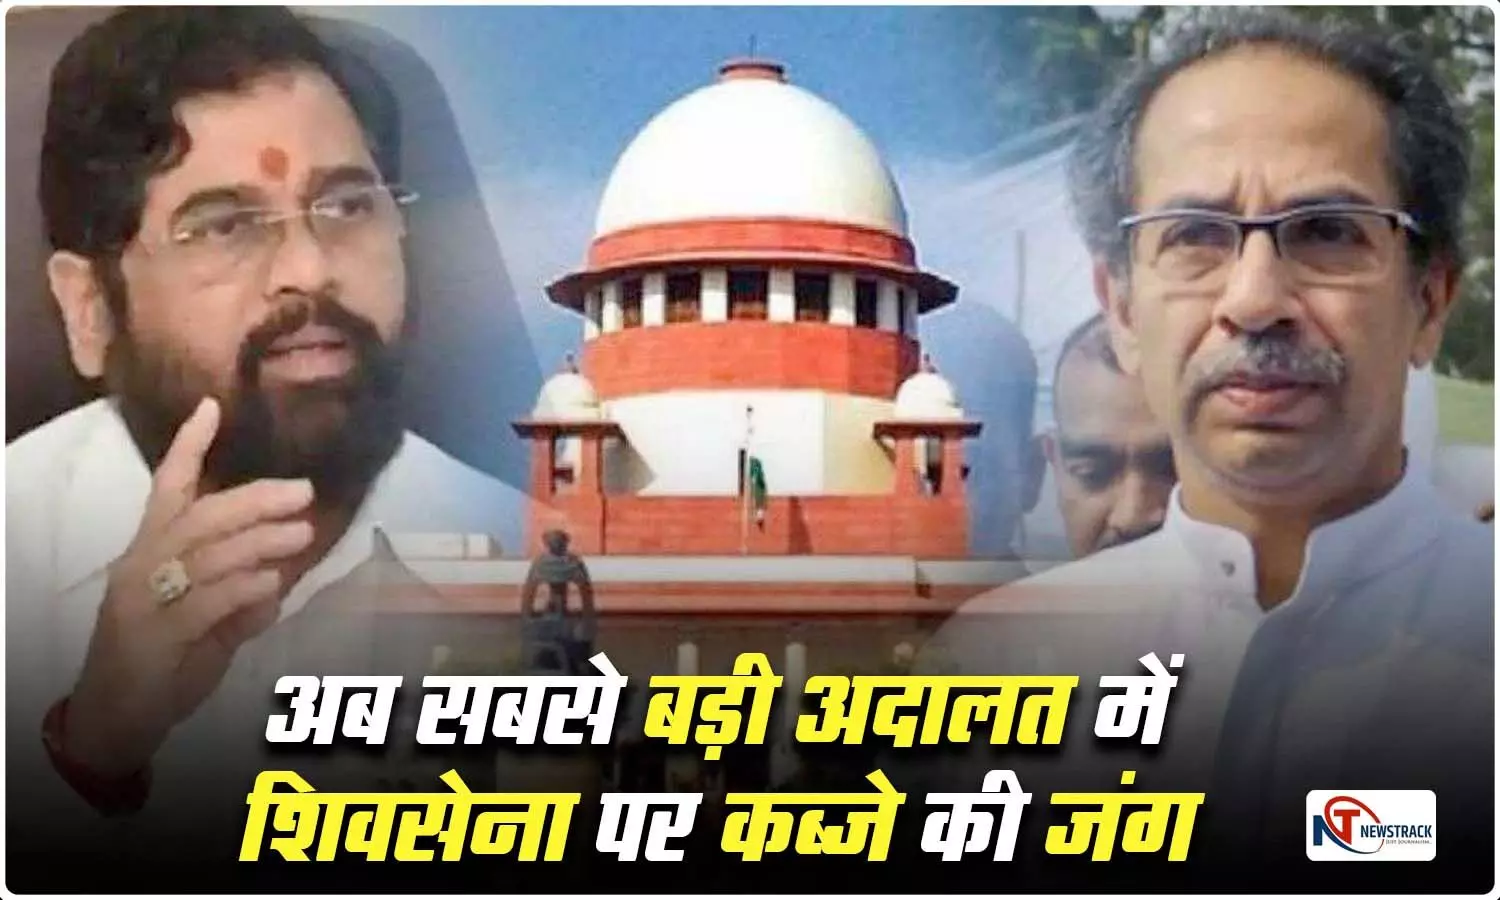 uddhav thackeray challenge eci decision in supreme court